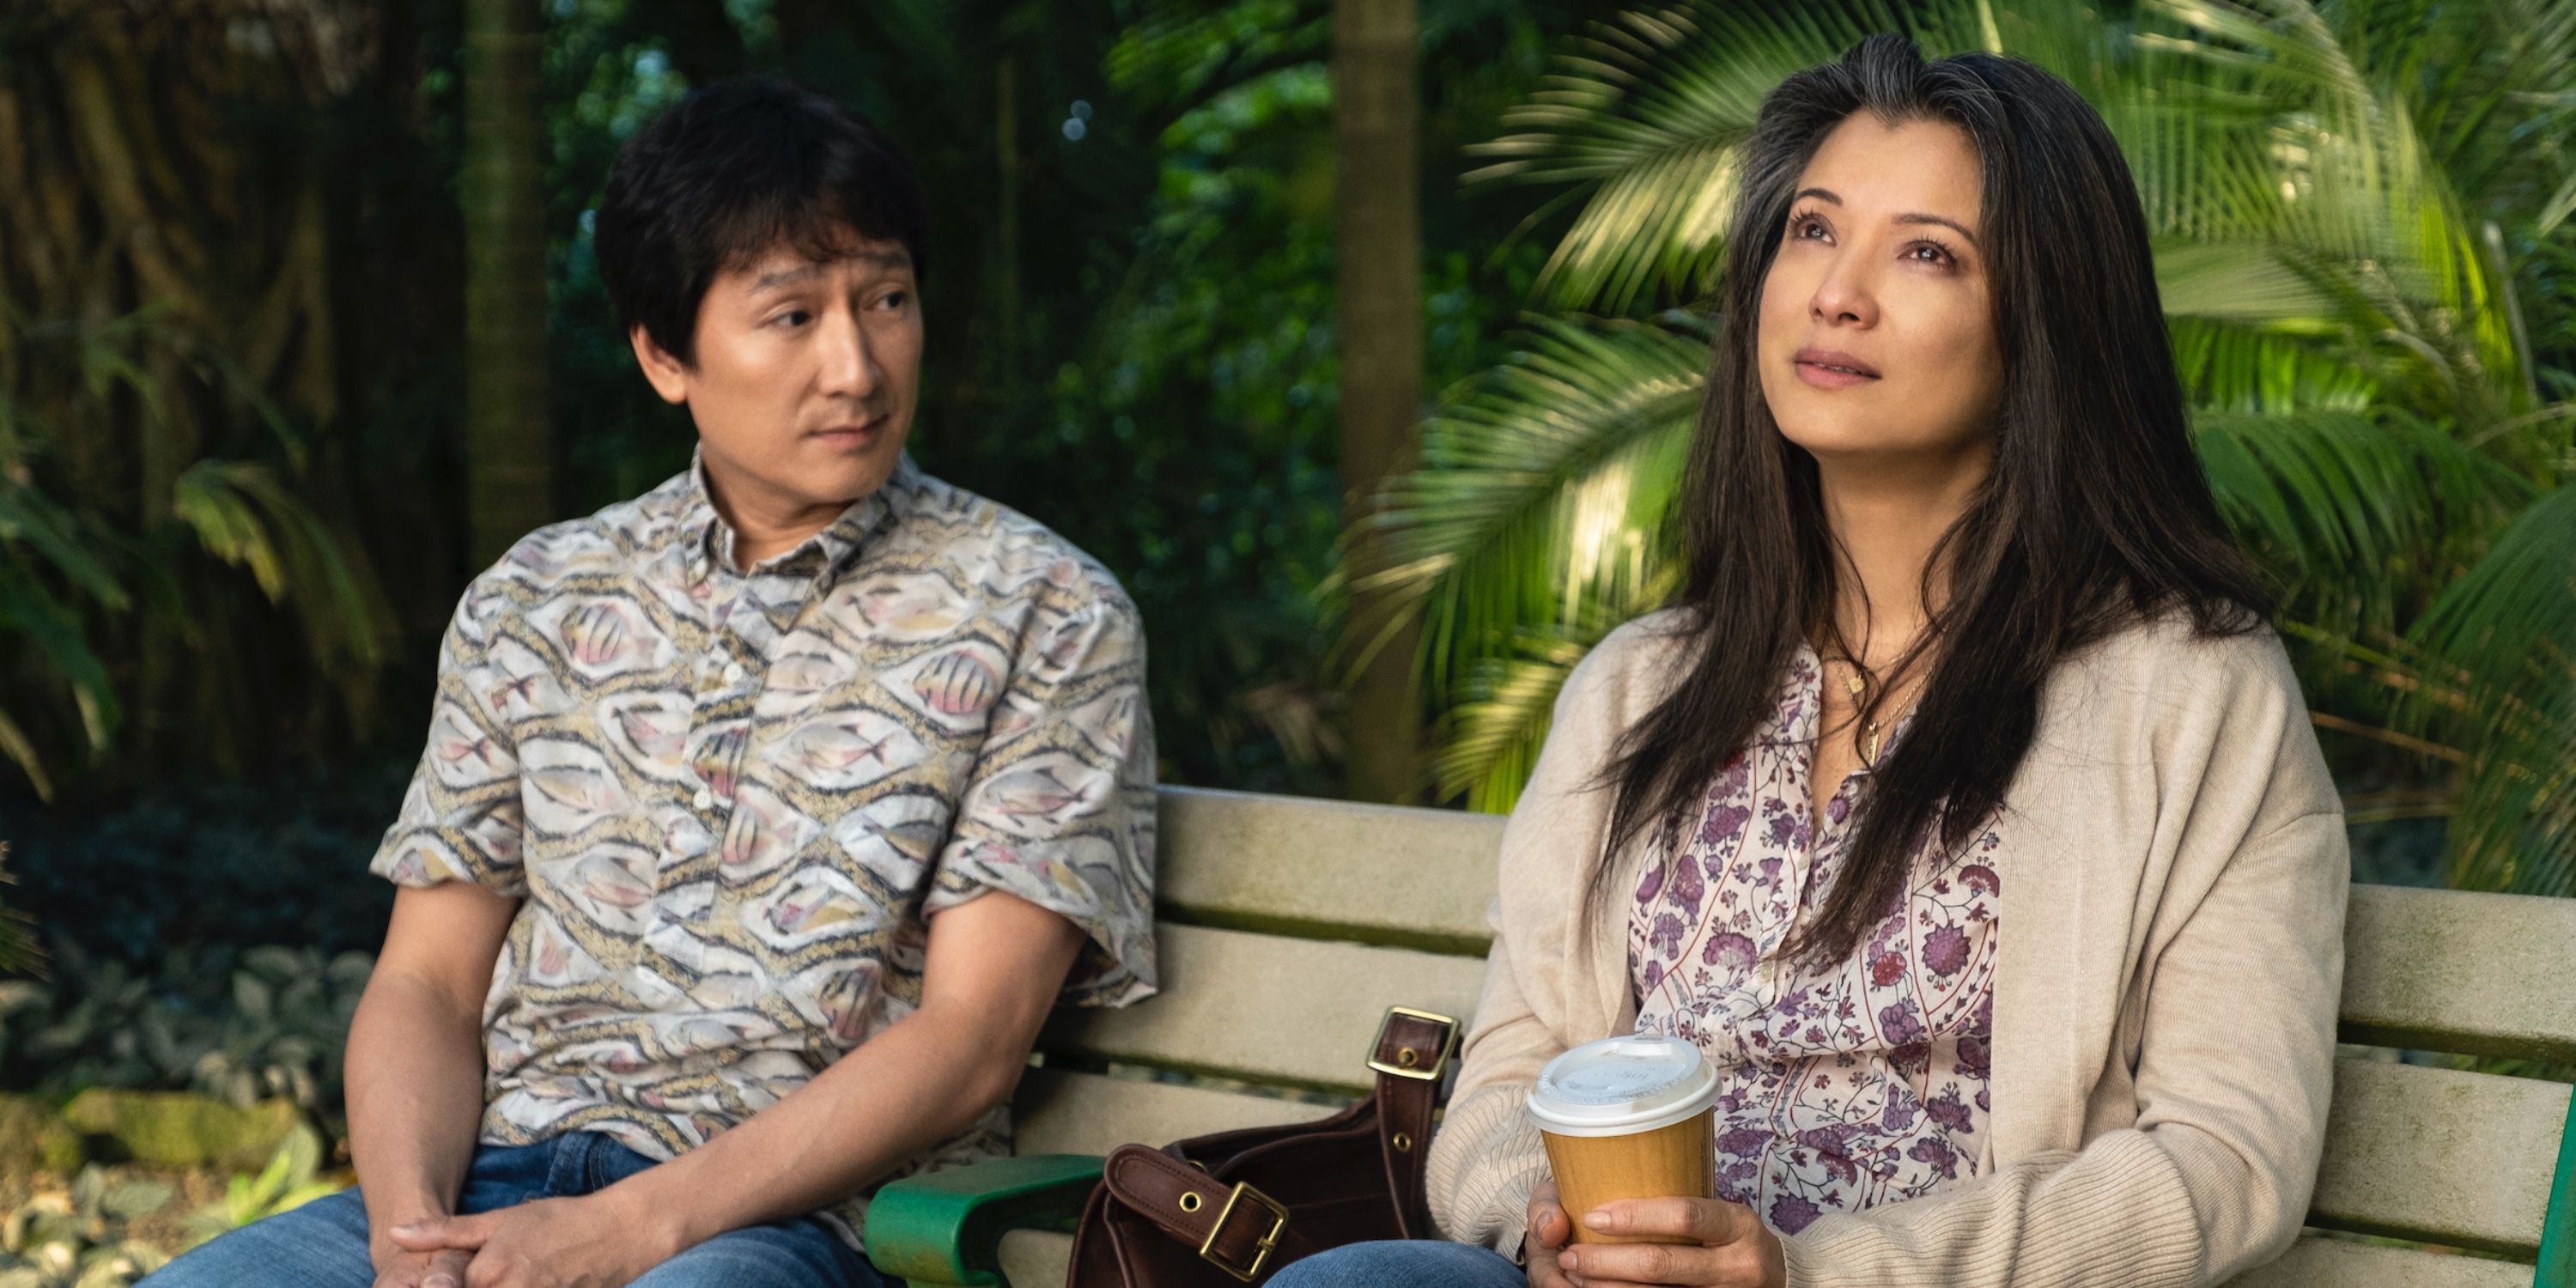 Ke Huy Quan and Kelly Hu in Finding 'Ohana on Netflix